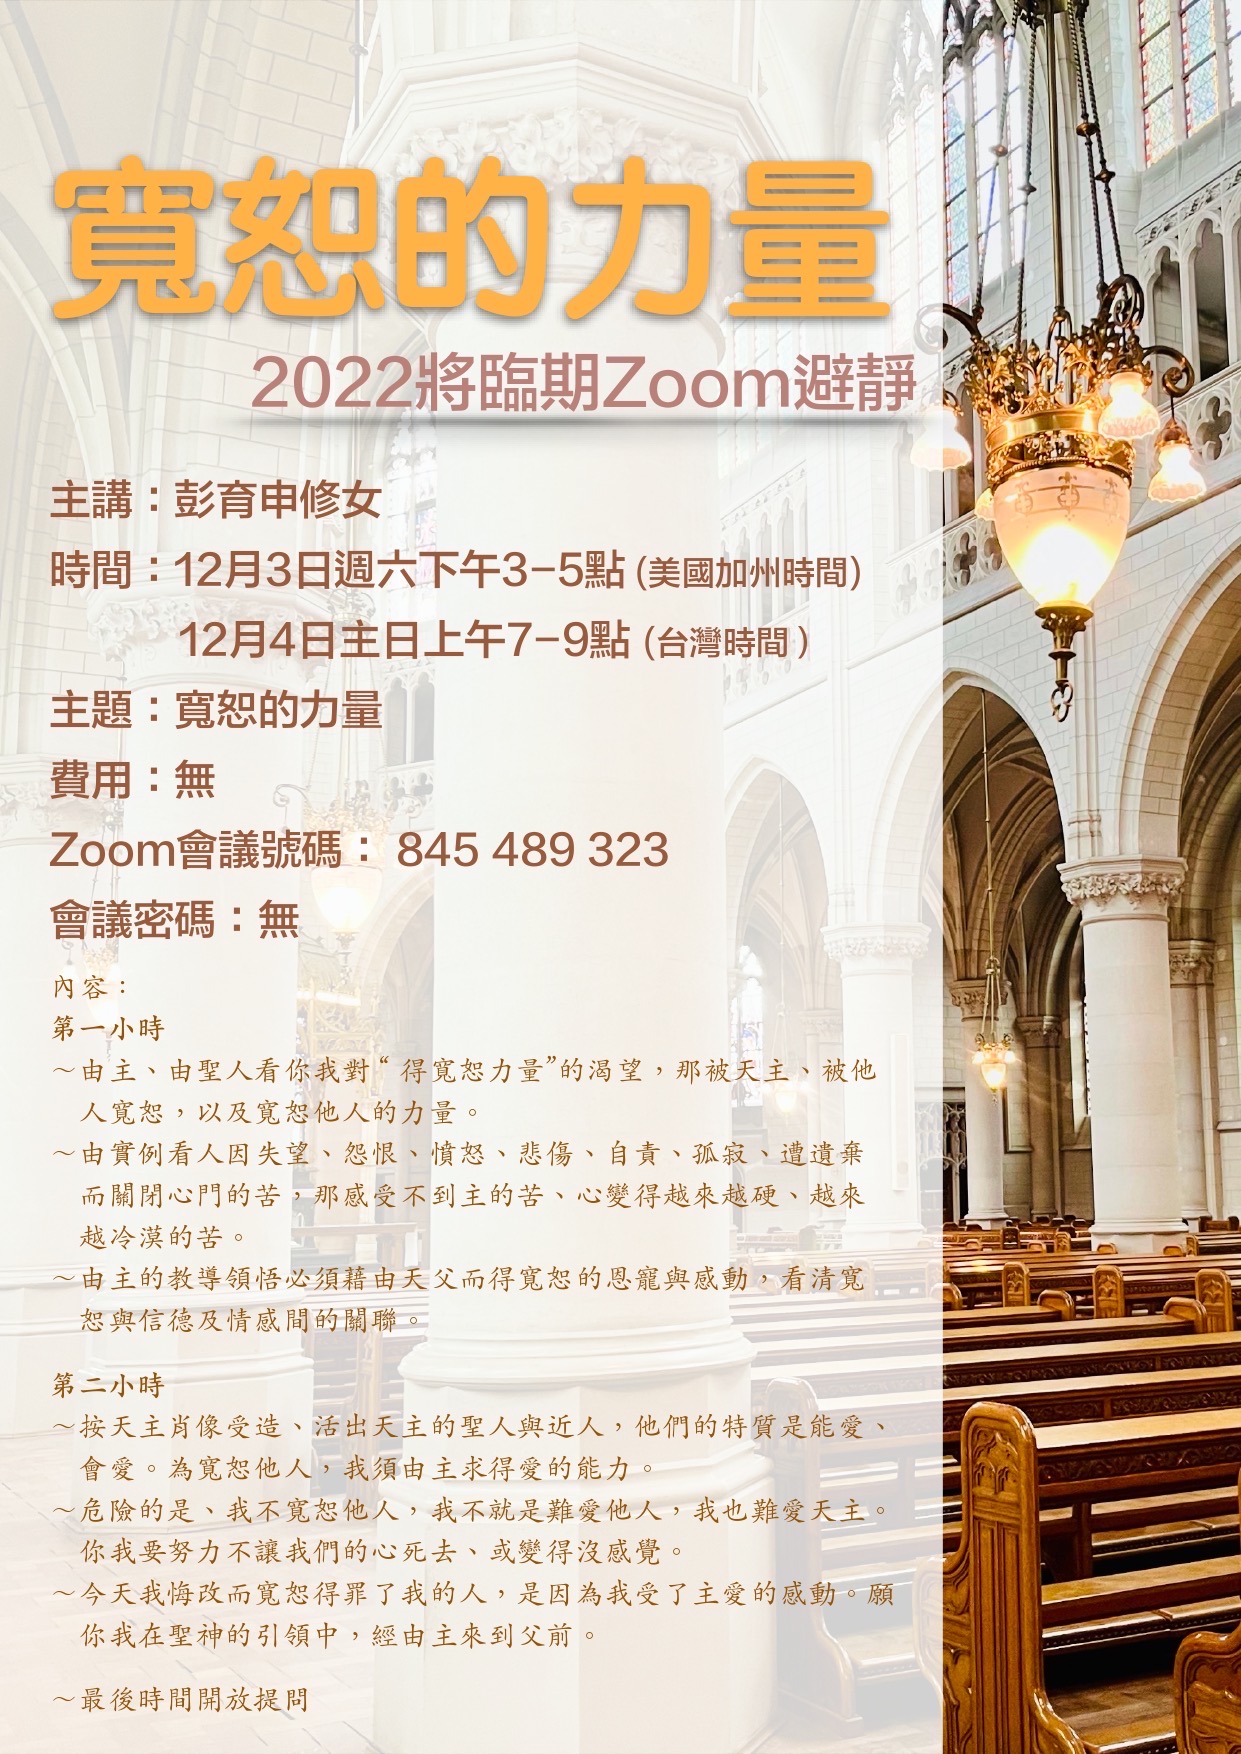 Sr. Peng's 2022 Zoom Advent Retreat